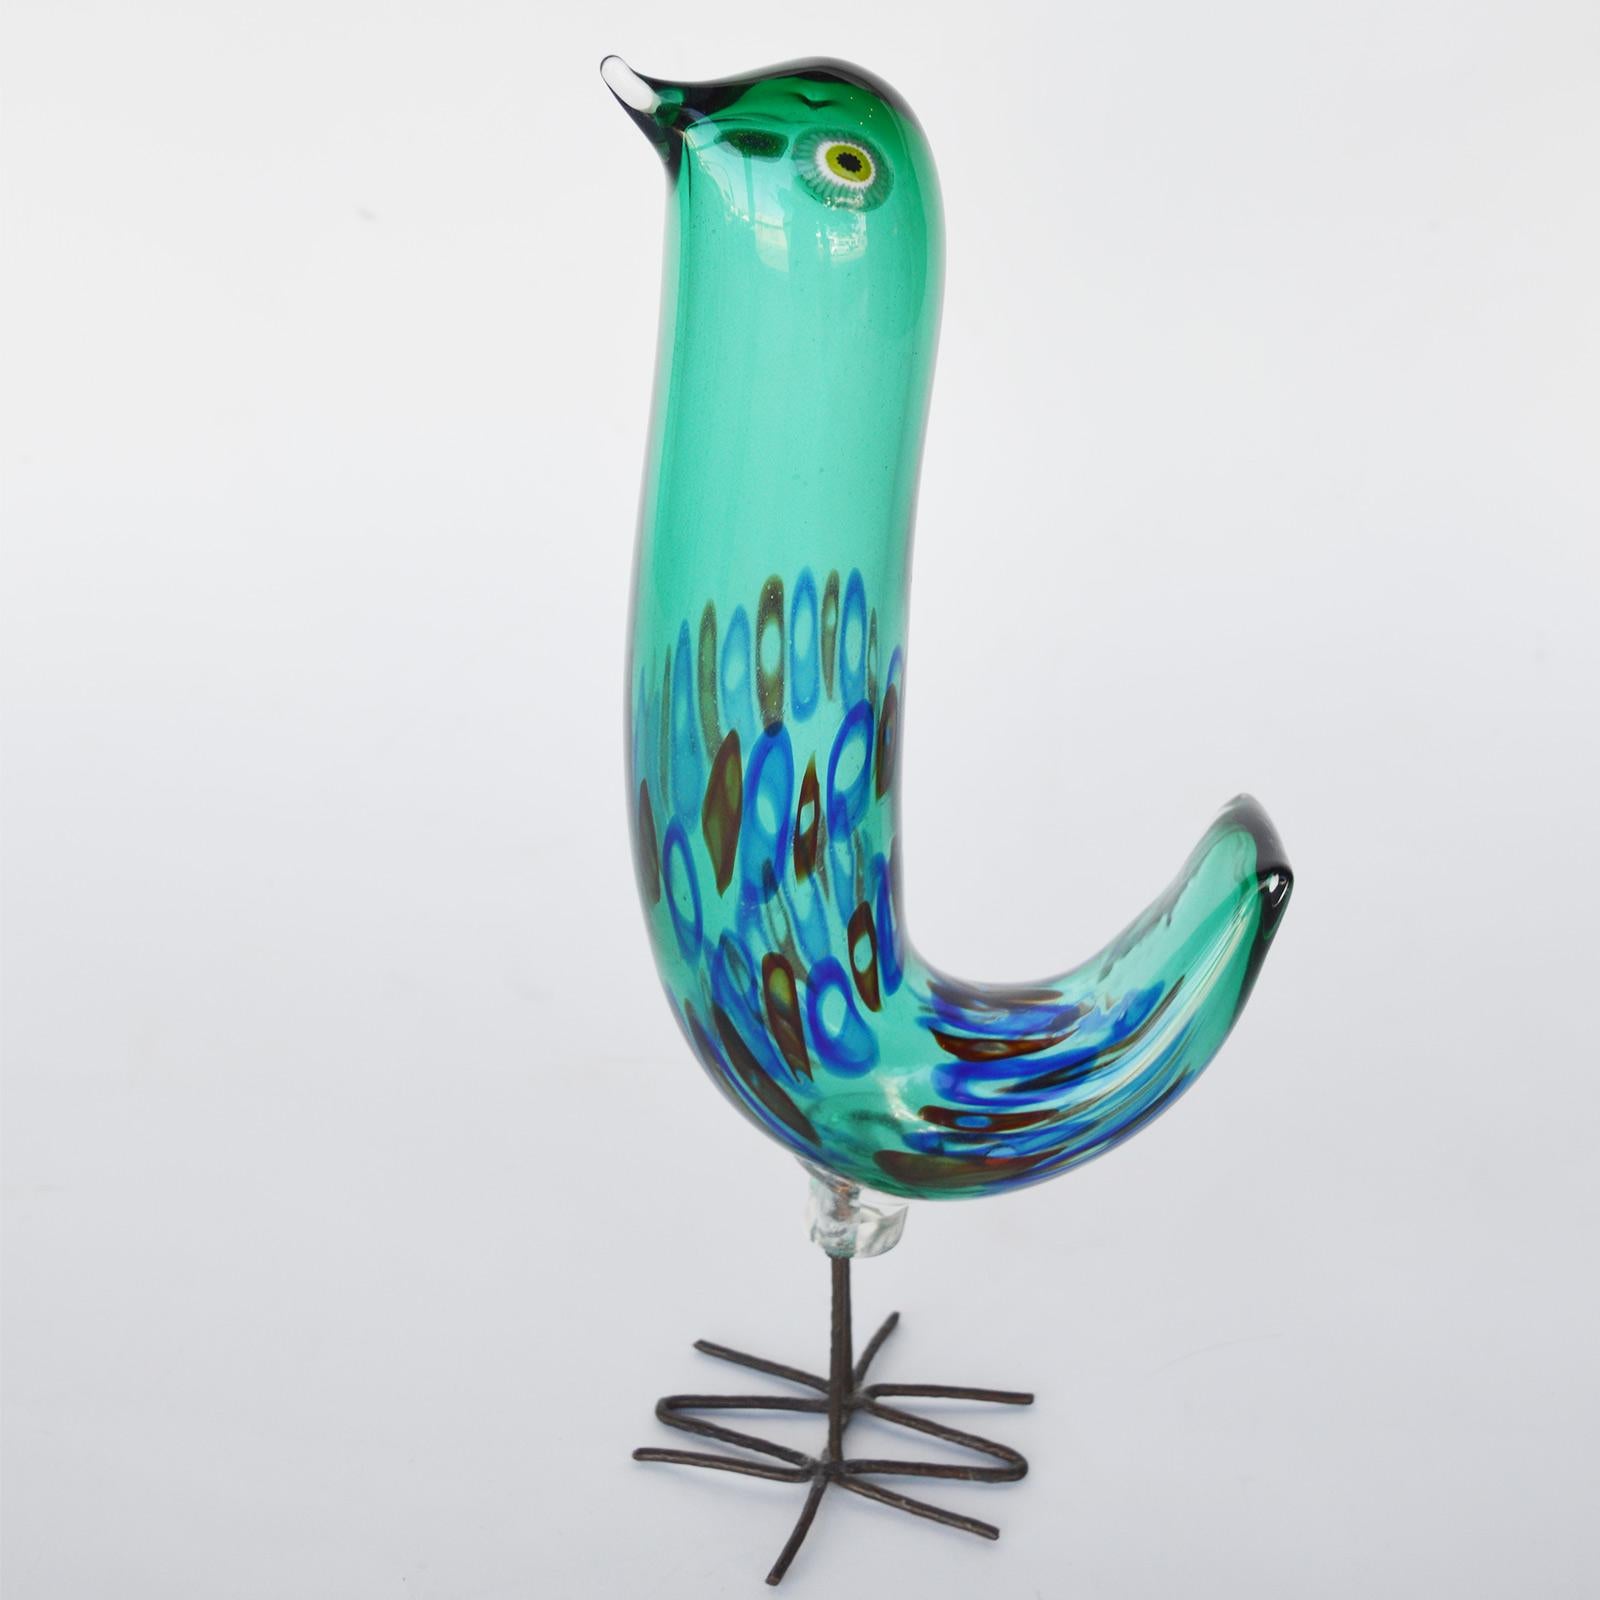 Pulcino glass bird by Alessandro Pianon, Vetreria Vistosi Murano, Italy, 1960-1969.